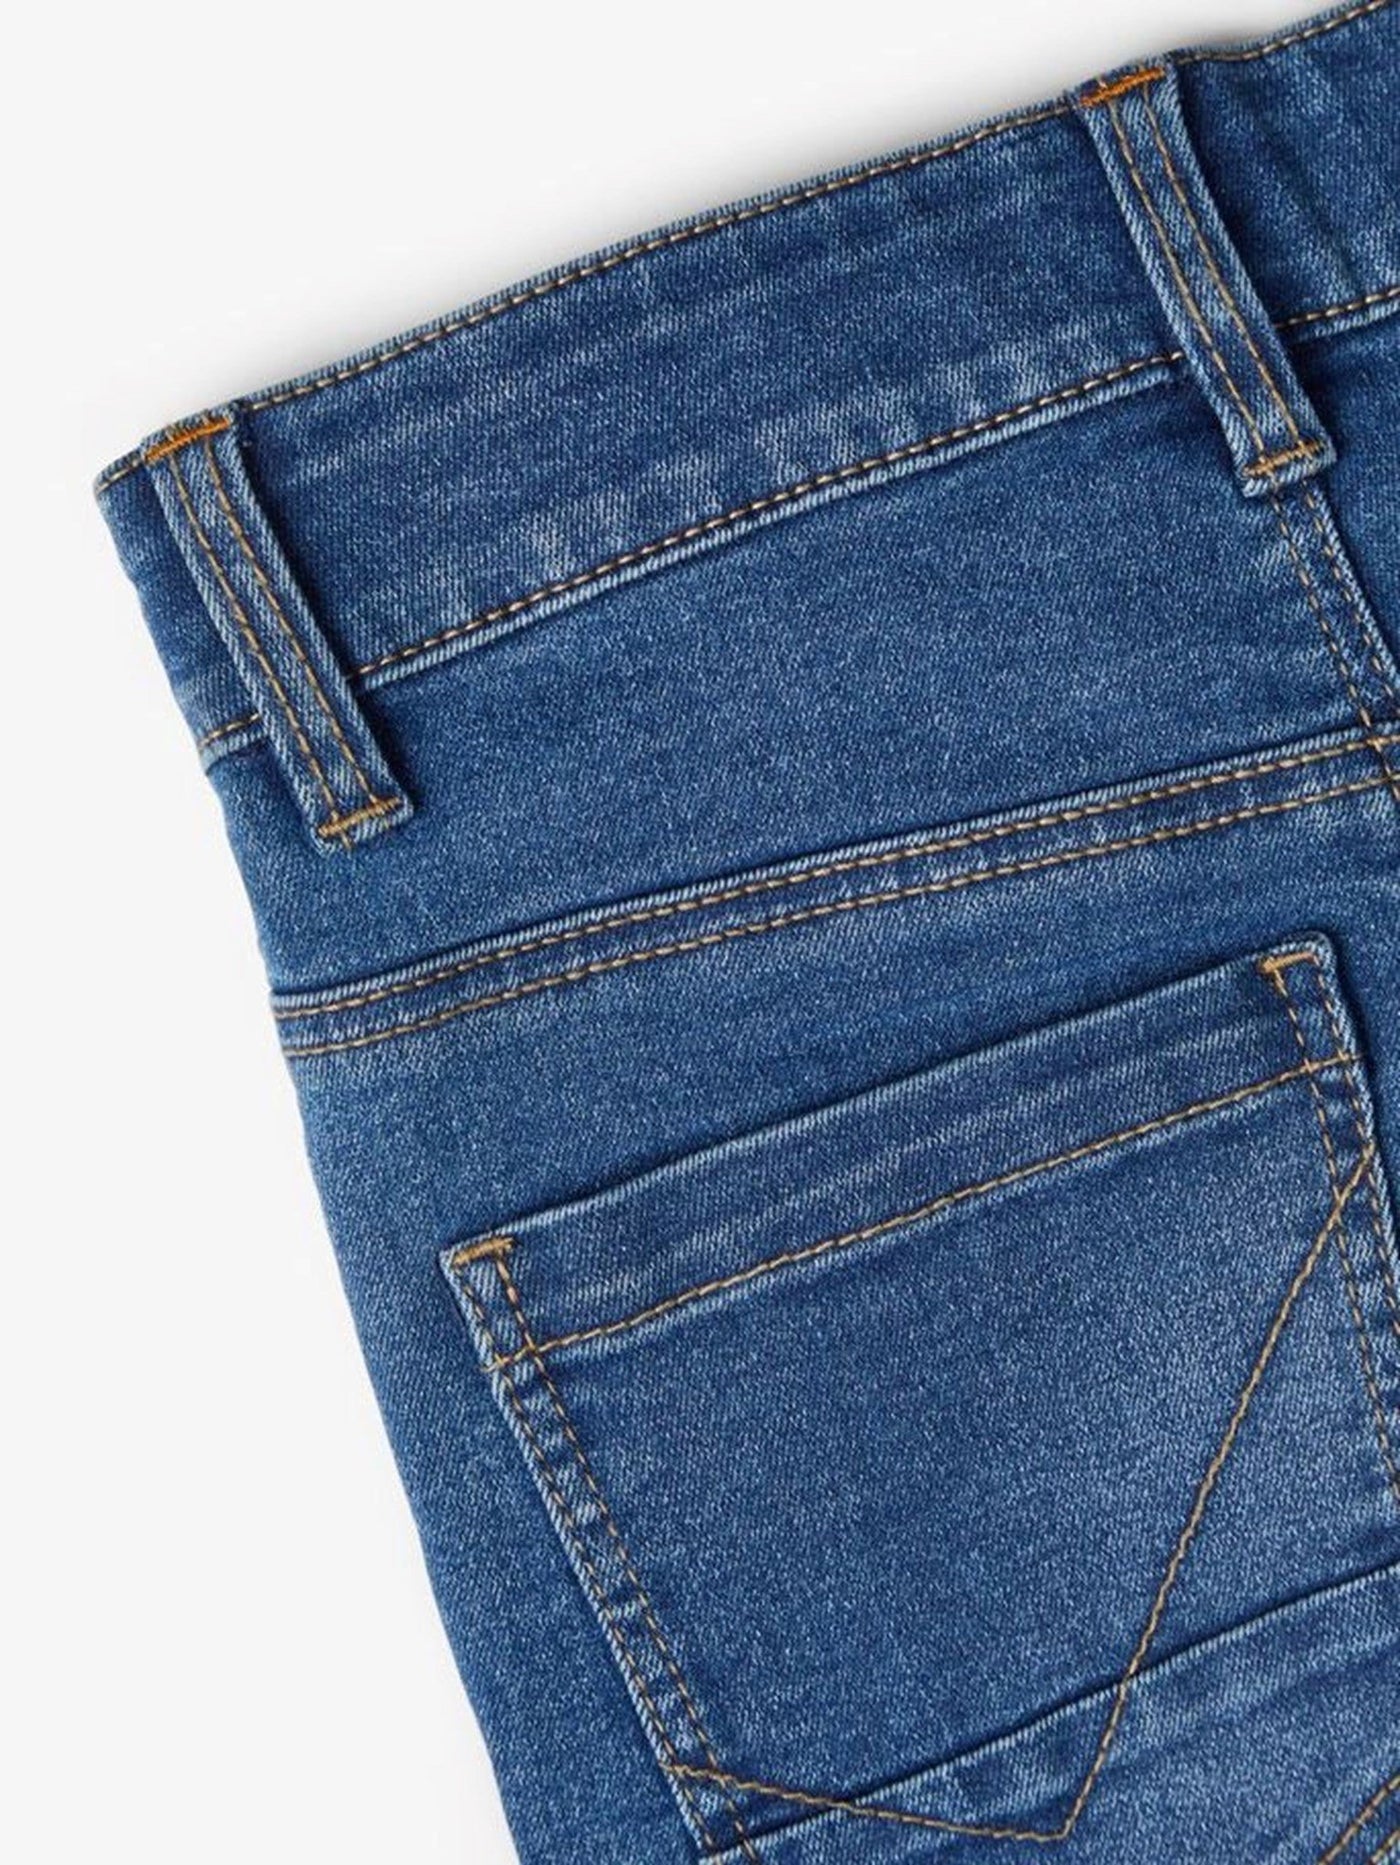 X-slim fit Jeans - Medium Blue Denim - Name It - Blå 5